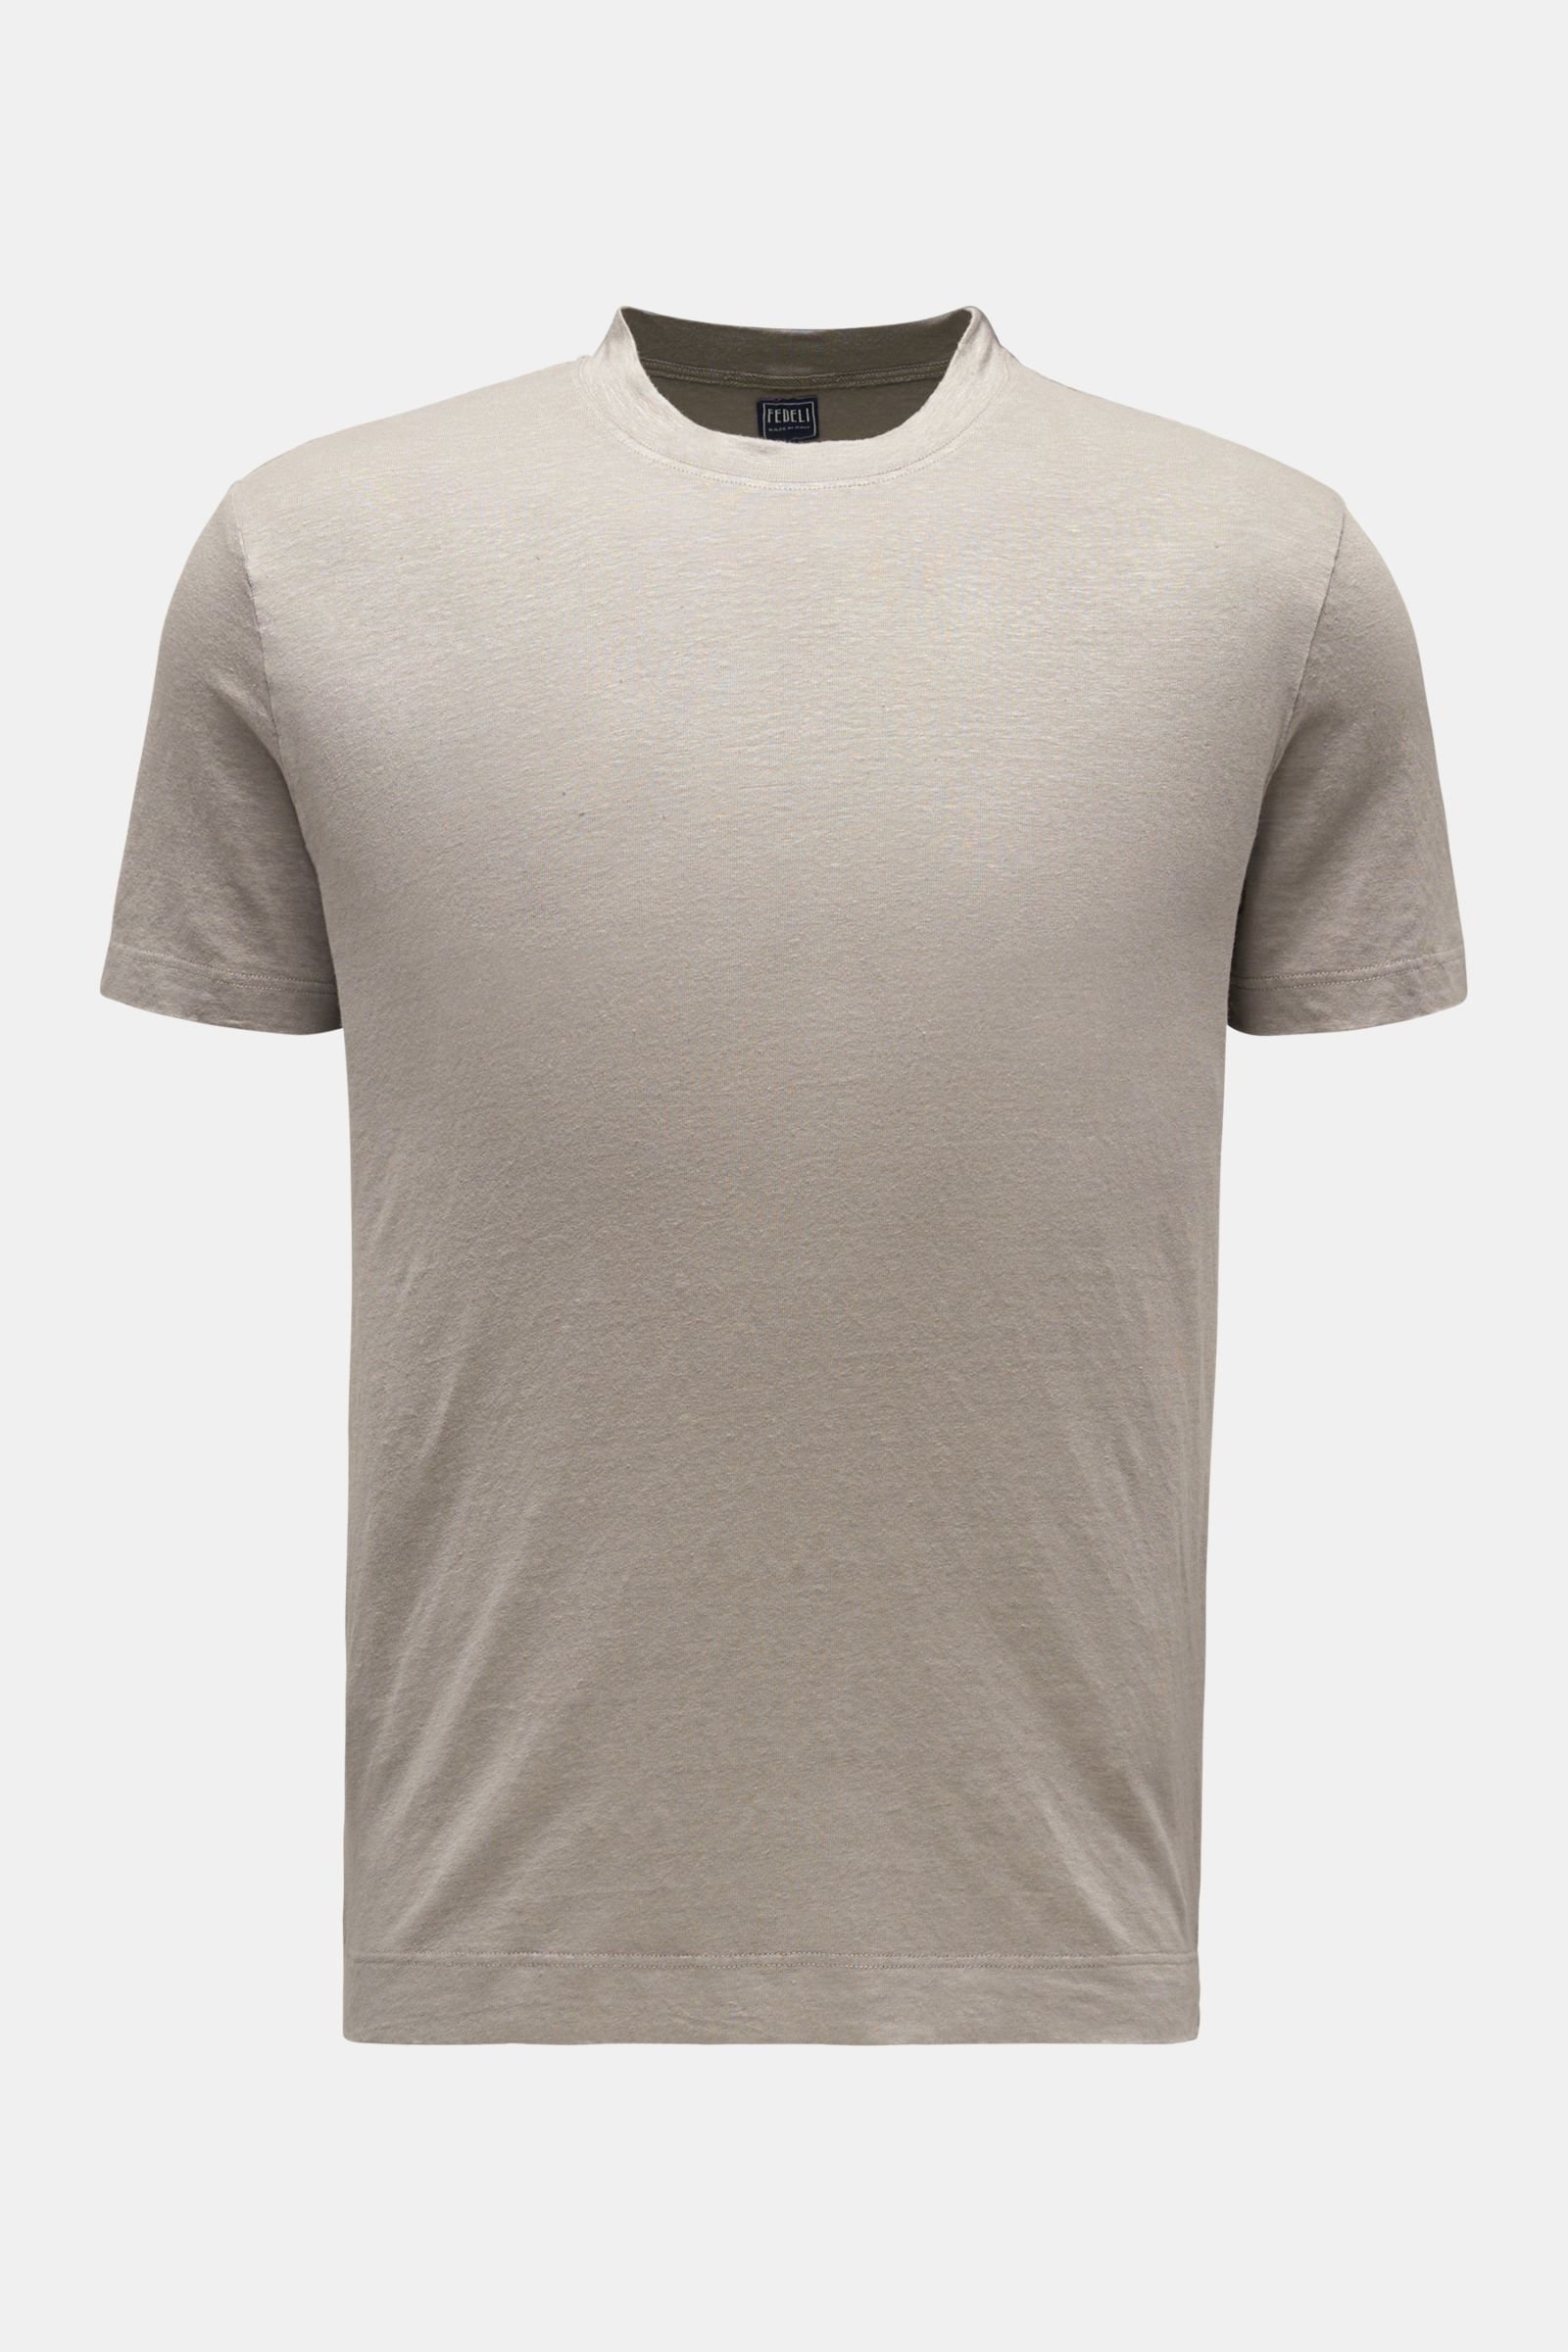 Linen crew neck T-shirt 'Extreme MM' grey-brown